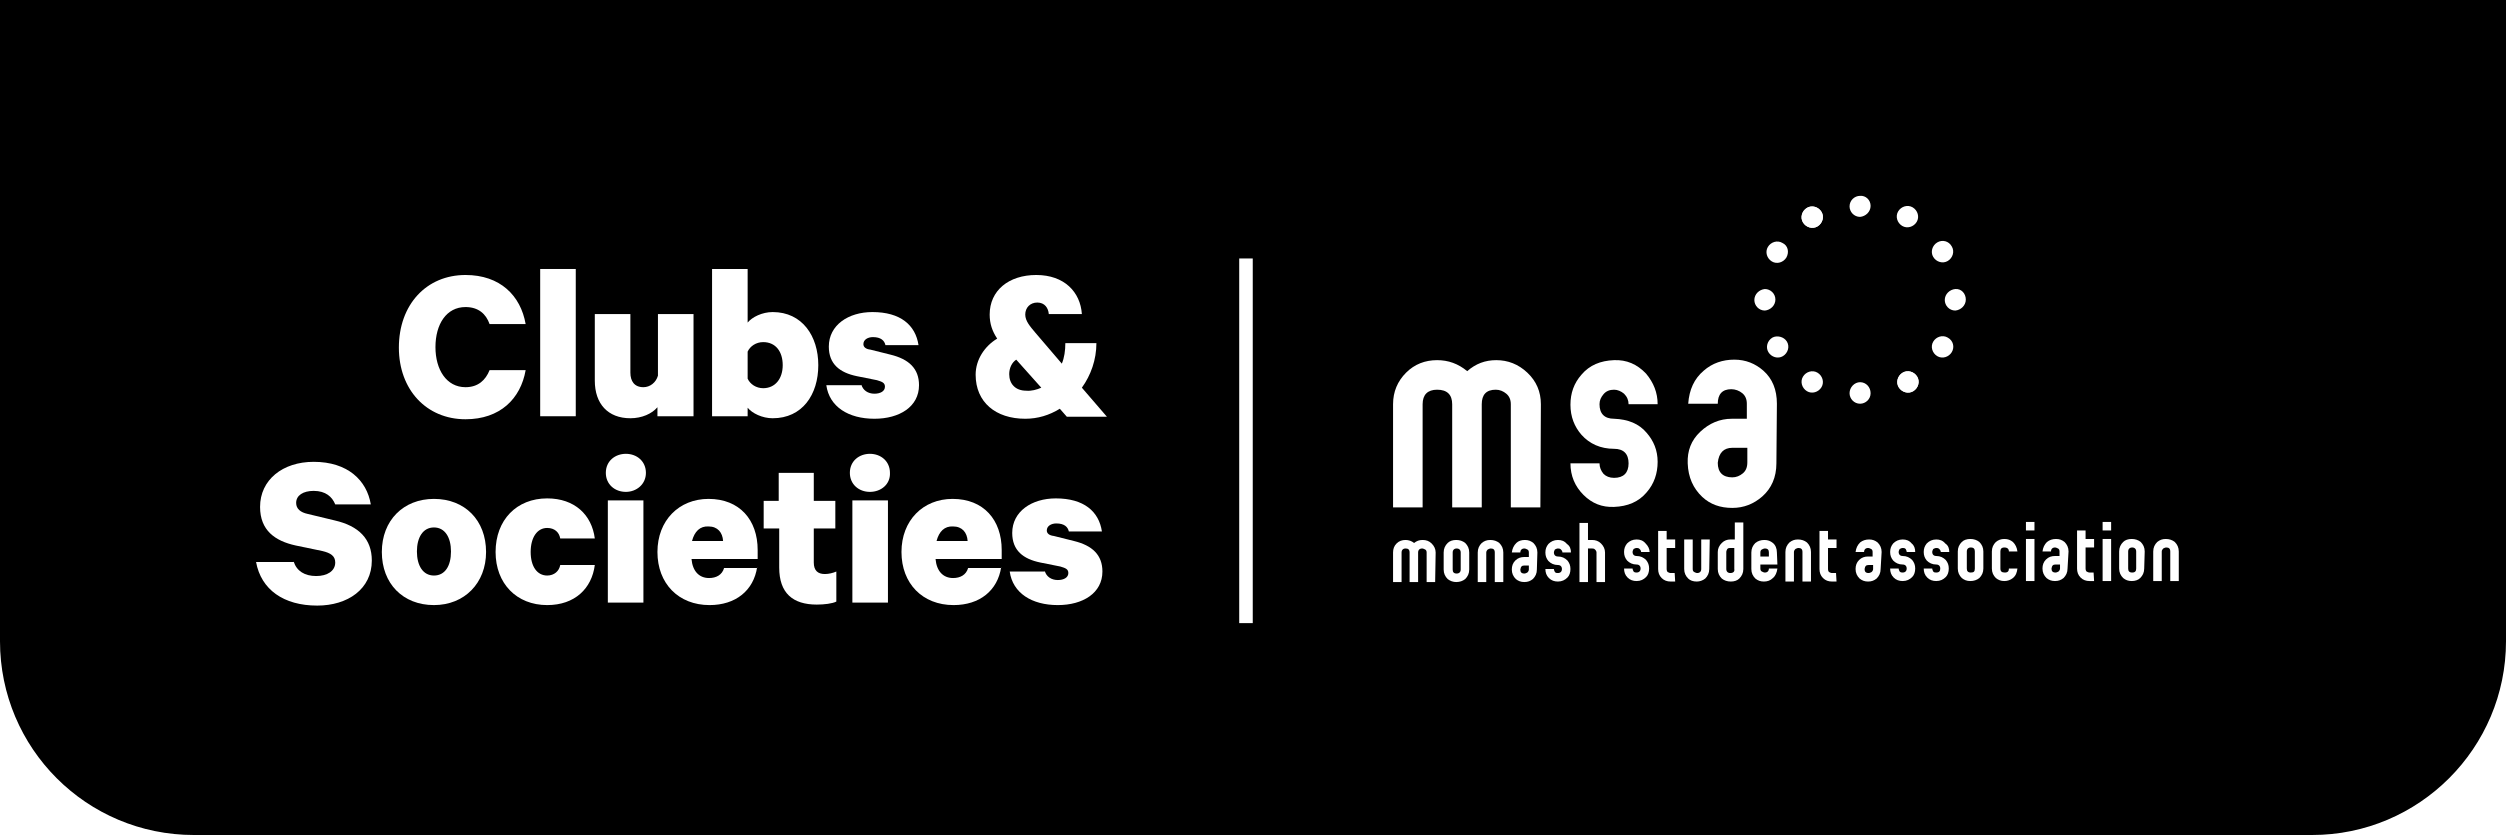 Monash Student Association Clubs & Societies